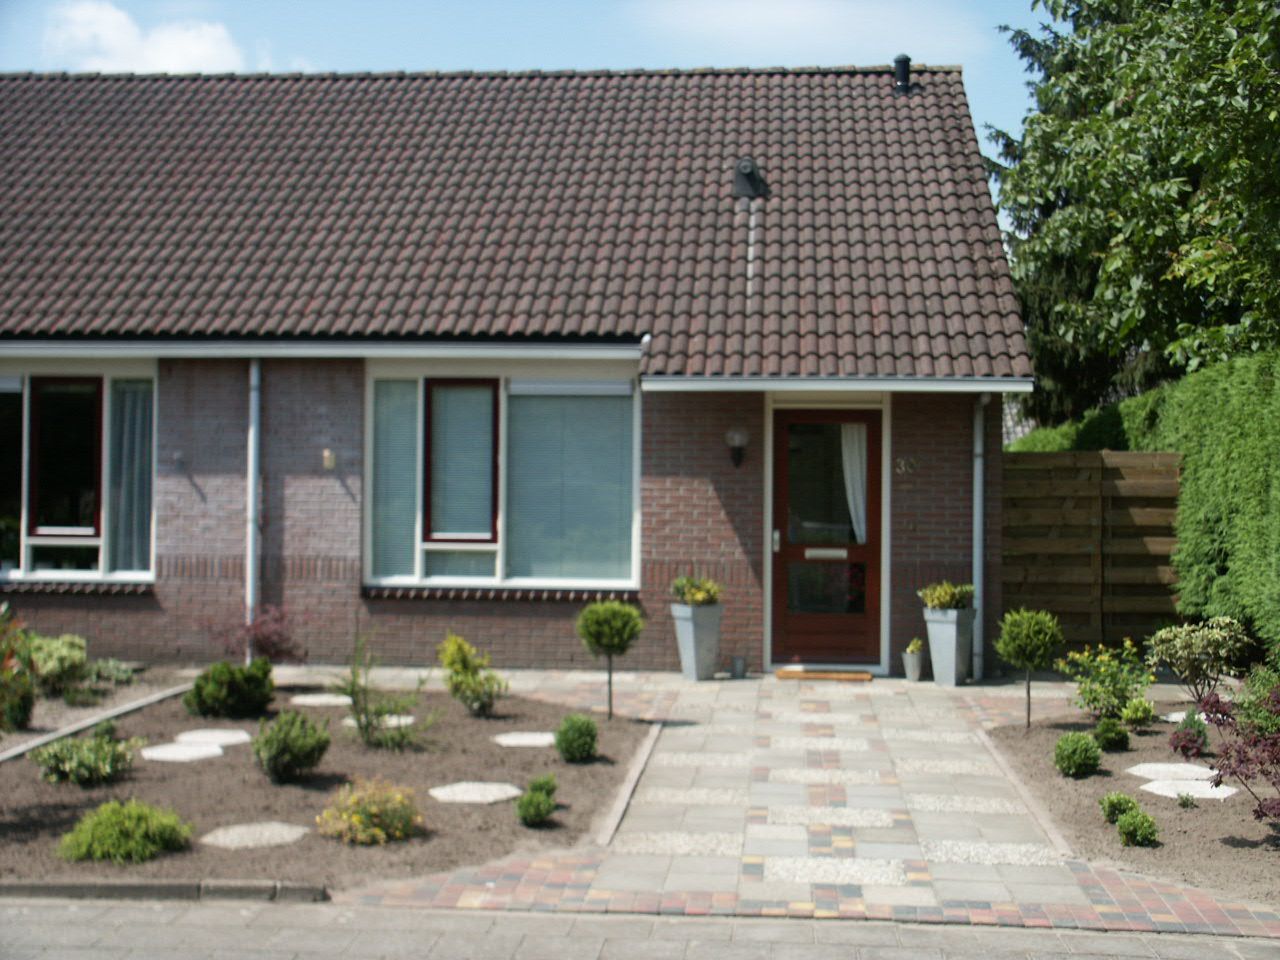 Caeciliënkamp 30, 7161 CV Neede, Nederland